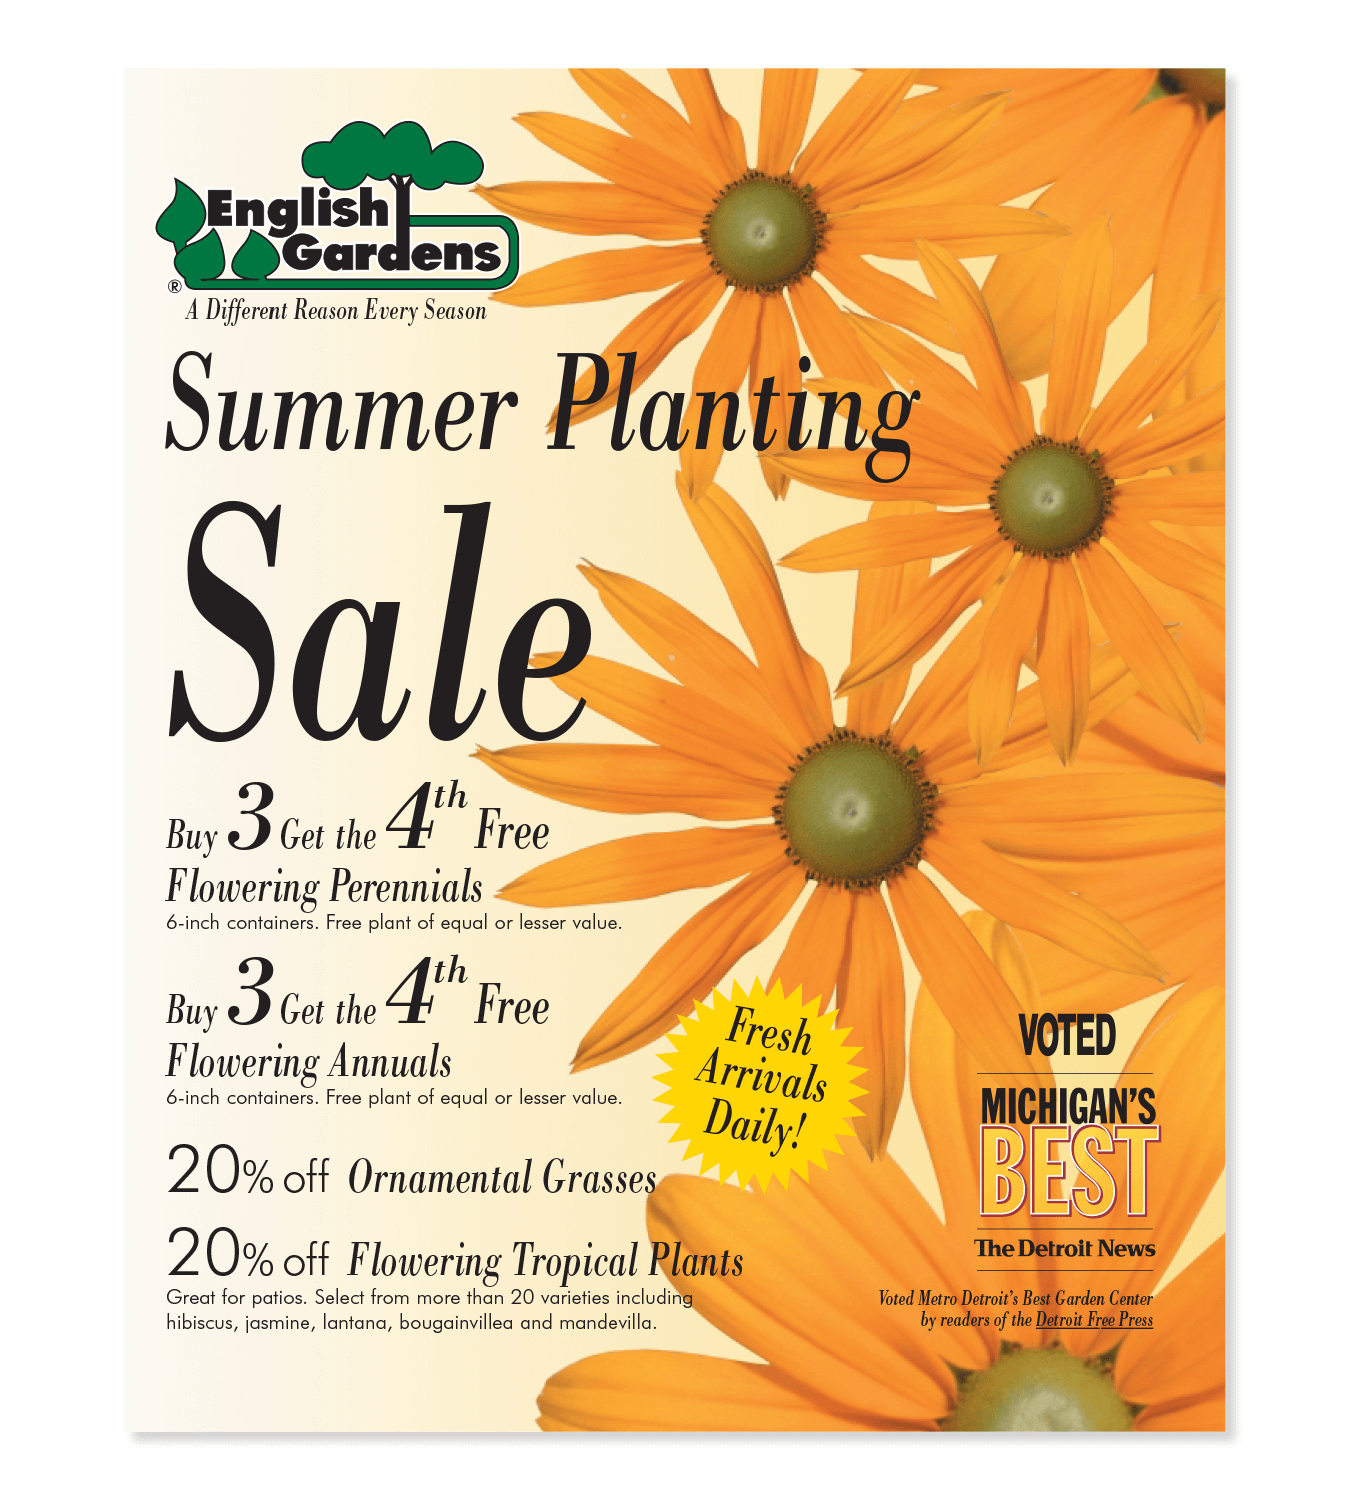 Summer Planting Hot sheet flyer for English Gardens